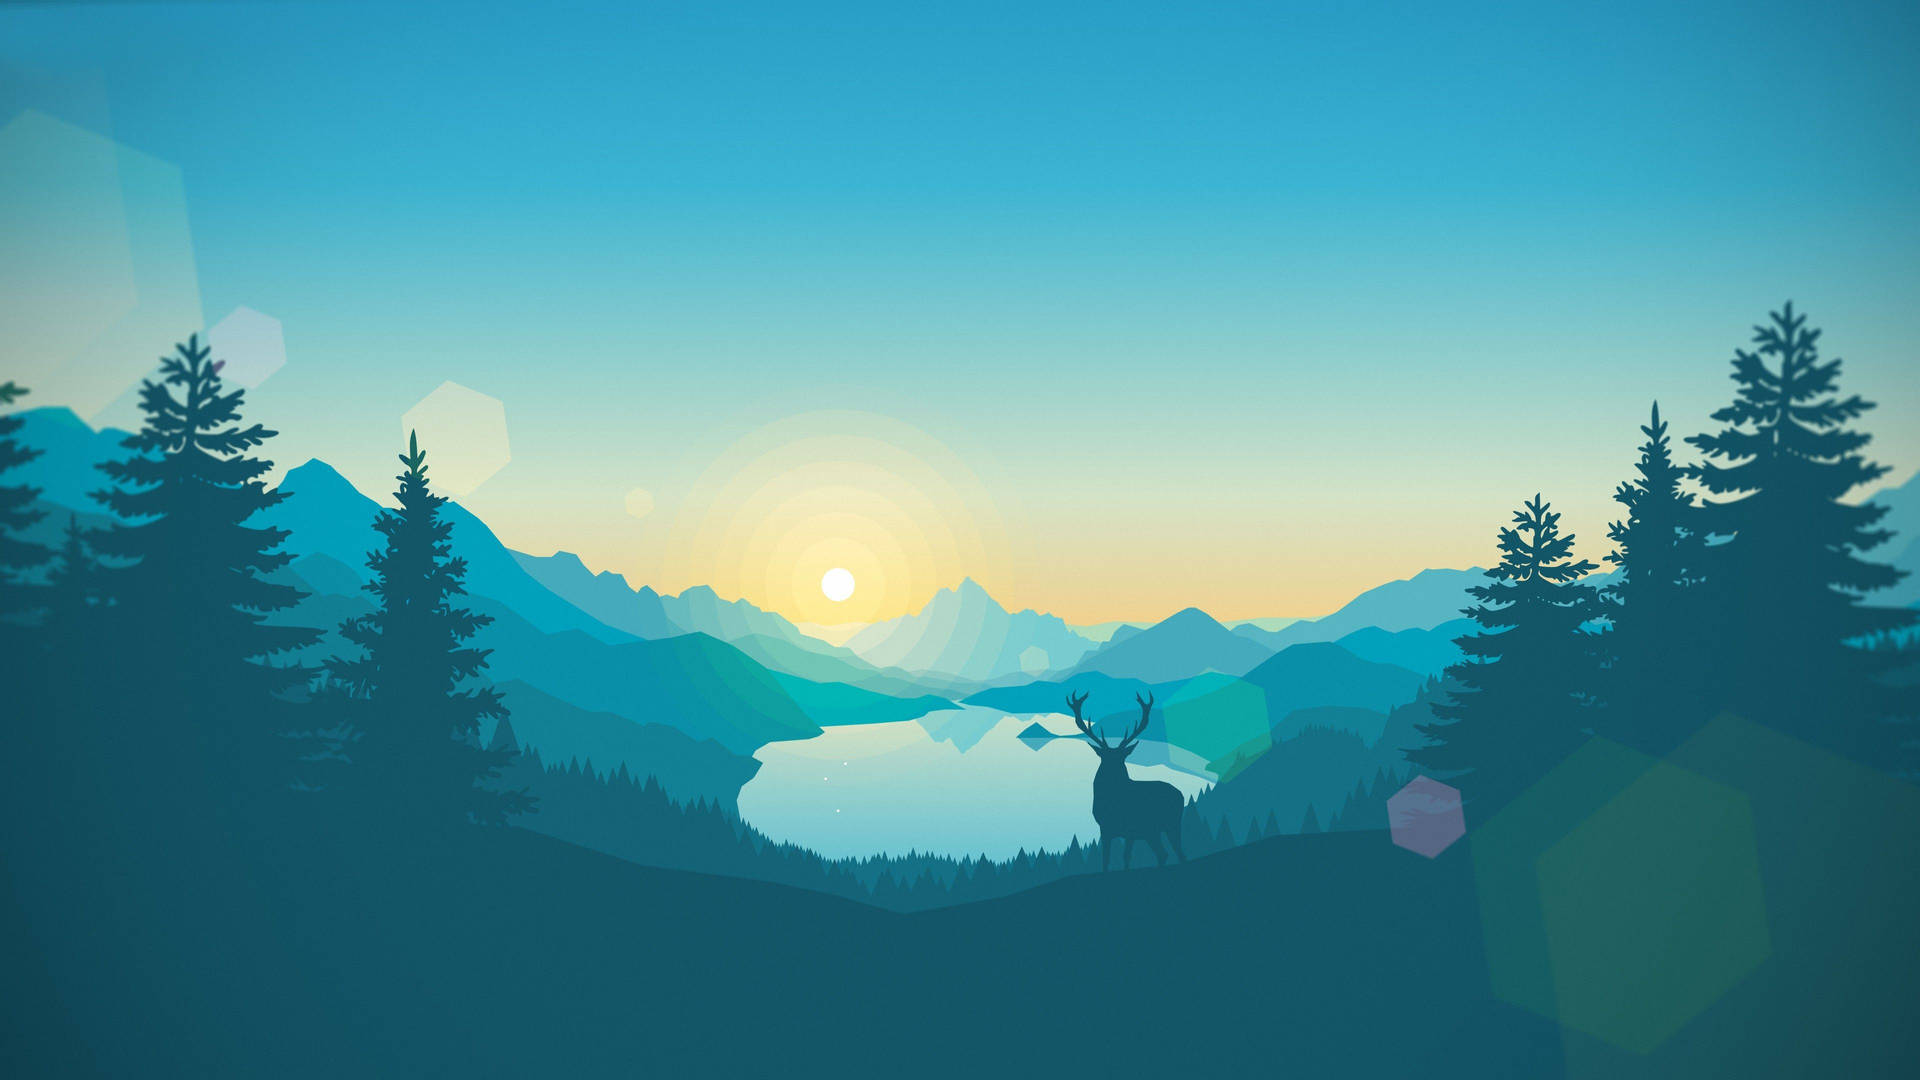 Reindeer’s Forest 4k Ultra Widescreen Background